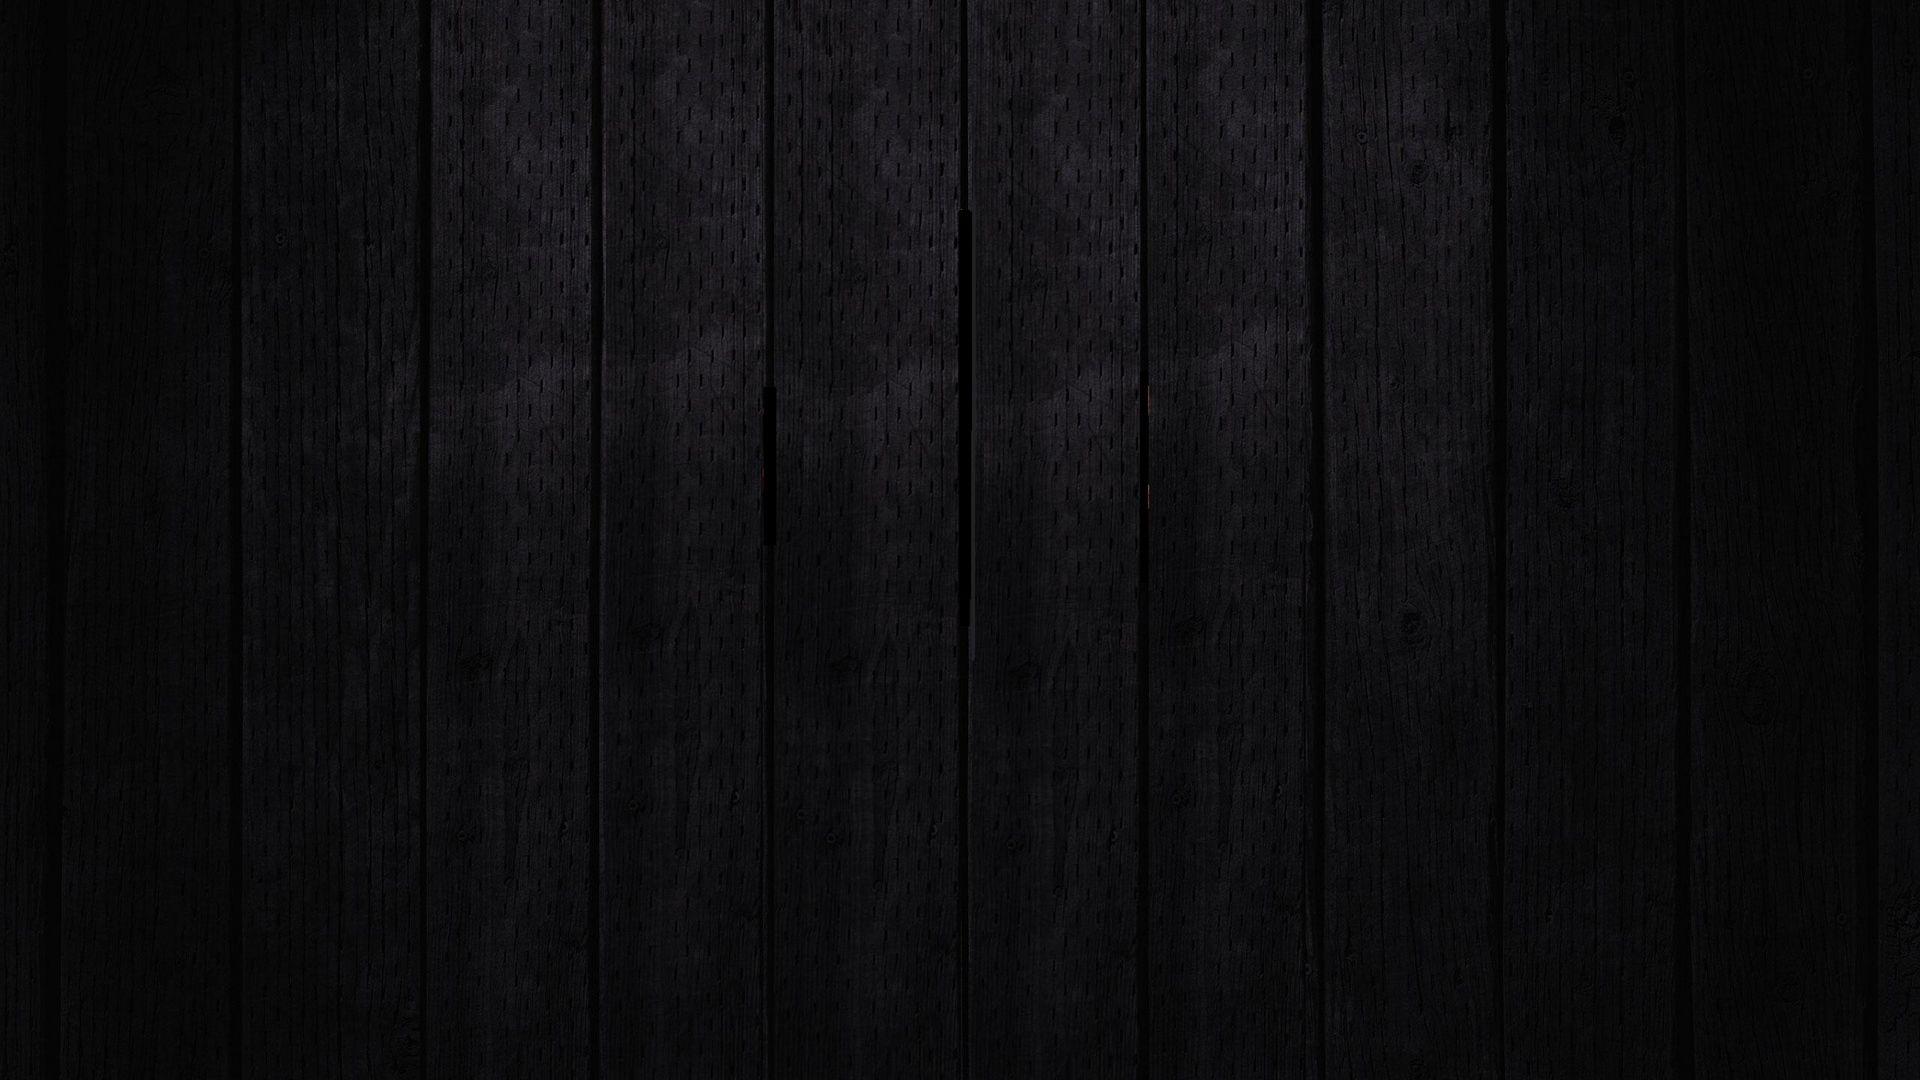 Download wallpaper 1920x1080 black, dark, shadow full hd, hdtv, fhd